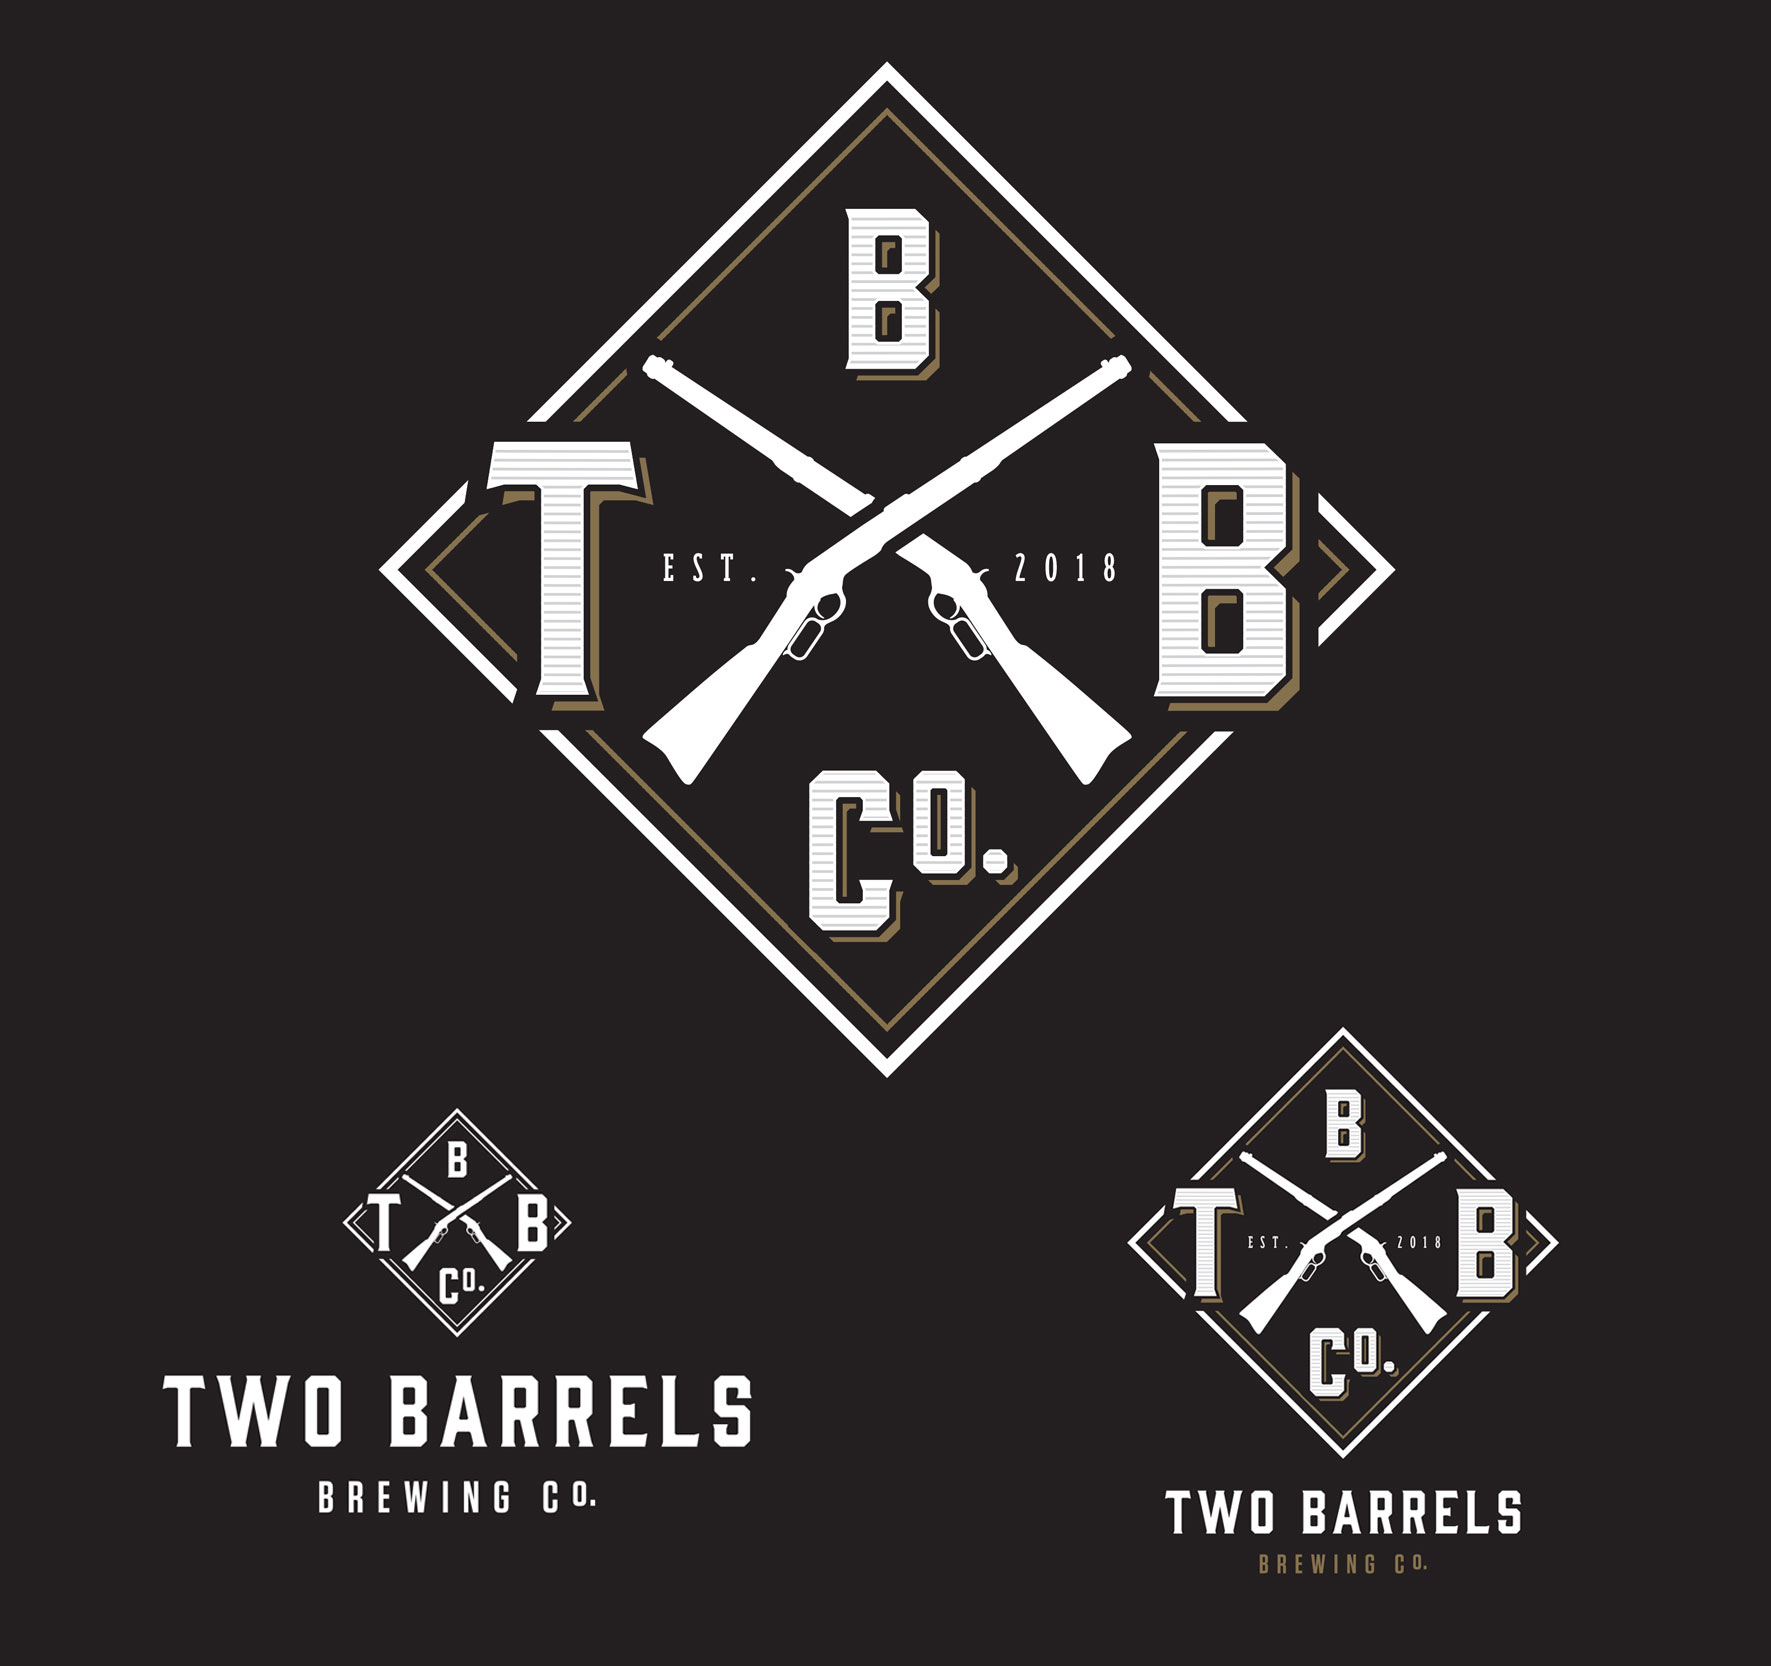 Two Barrels logo and branding